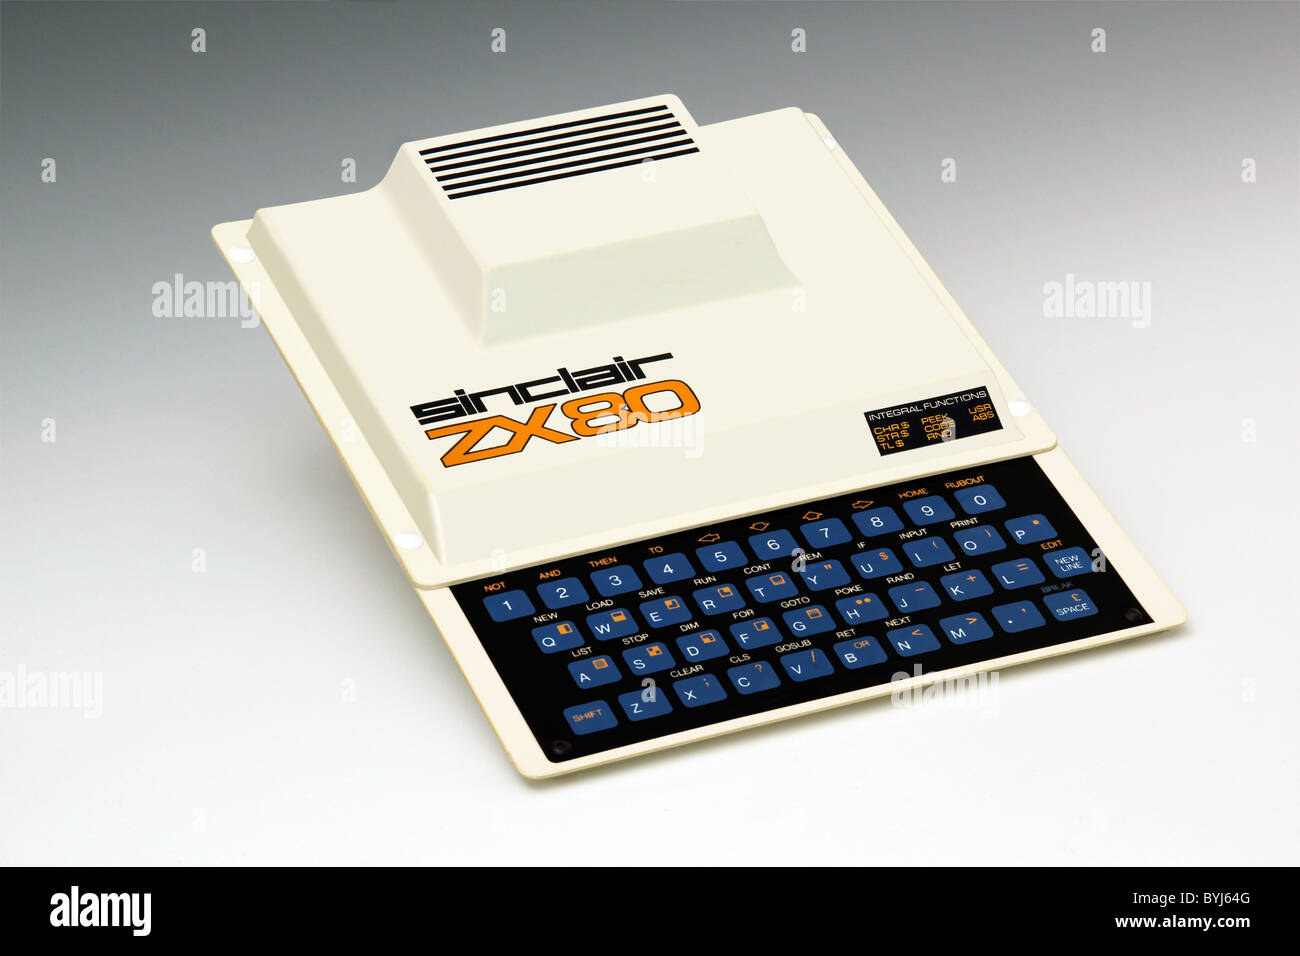 Sinclair ZX80 Personalcomputer von 1980. Tony Rusecki Stockfoto